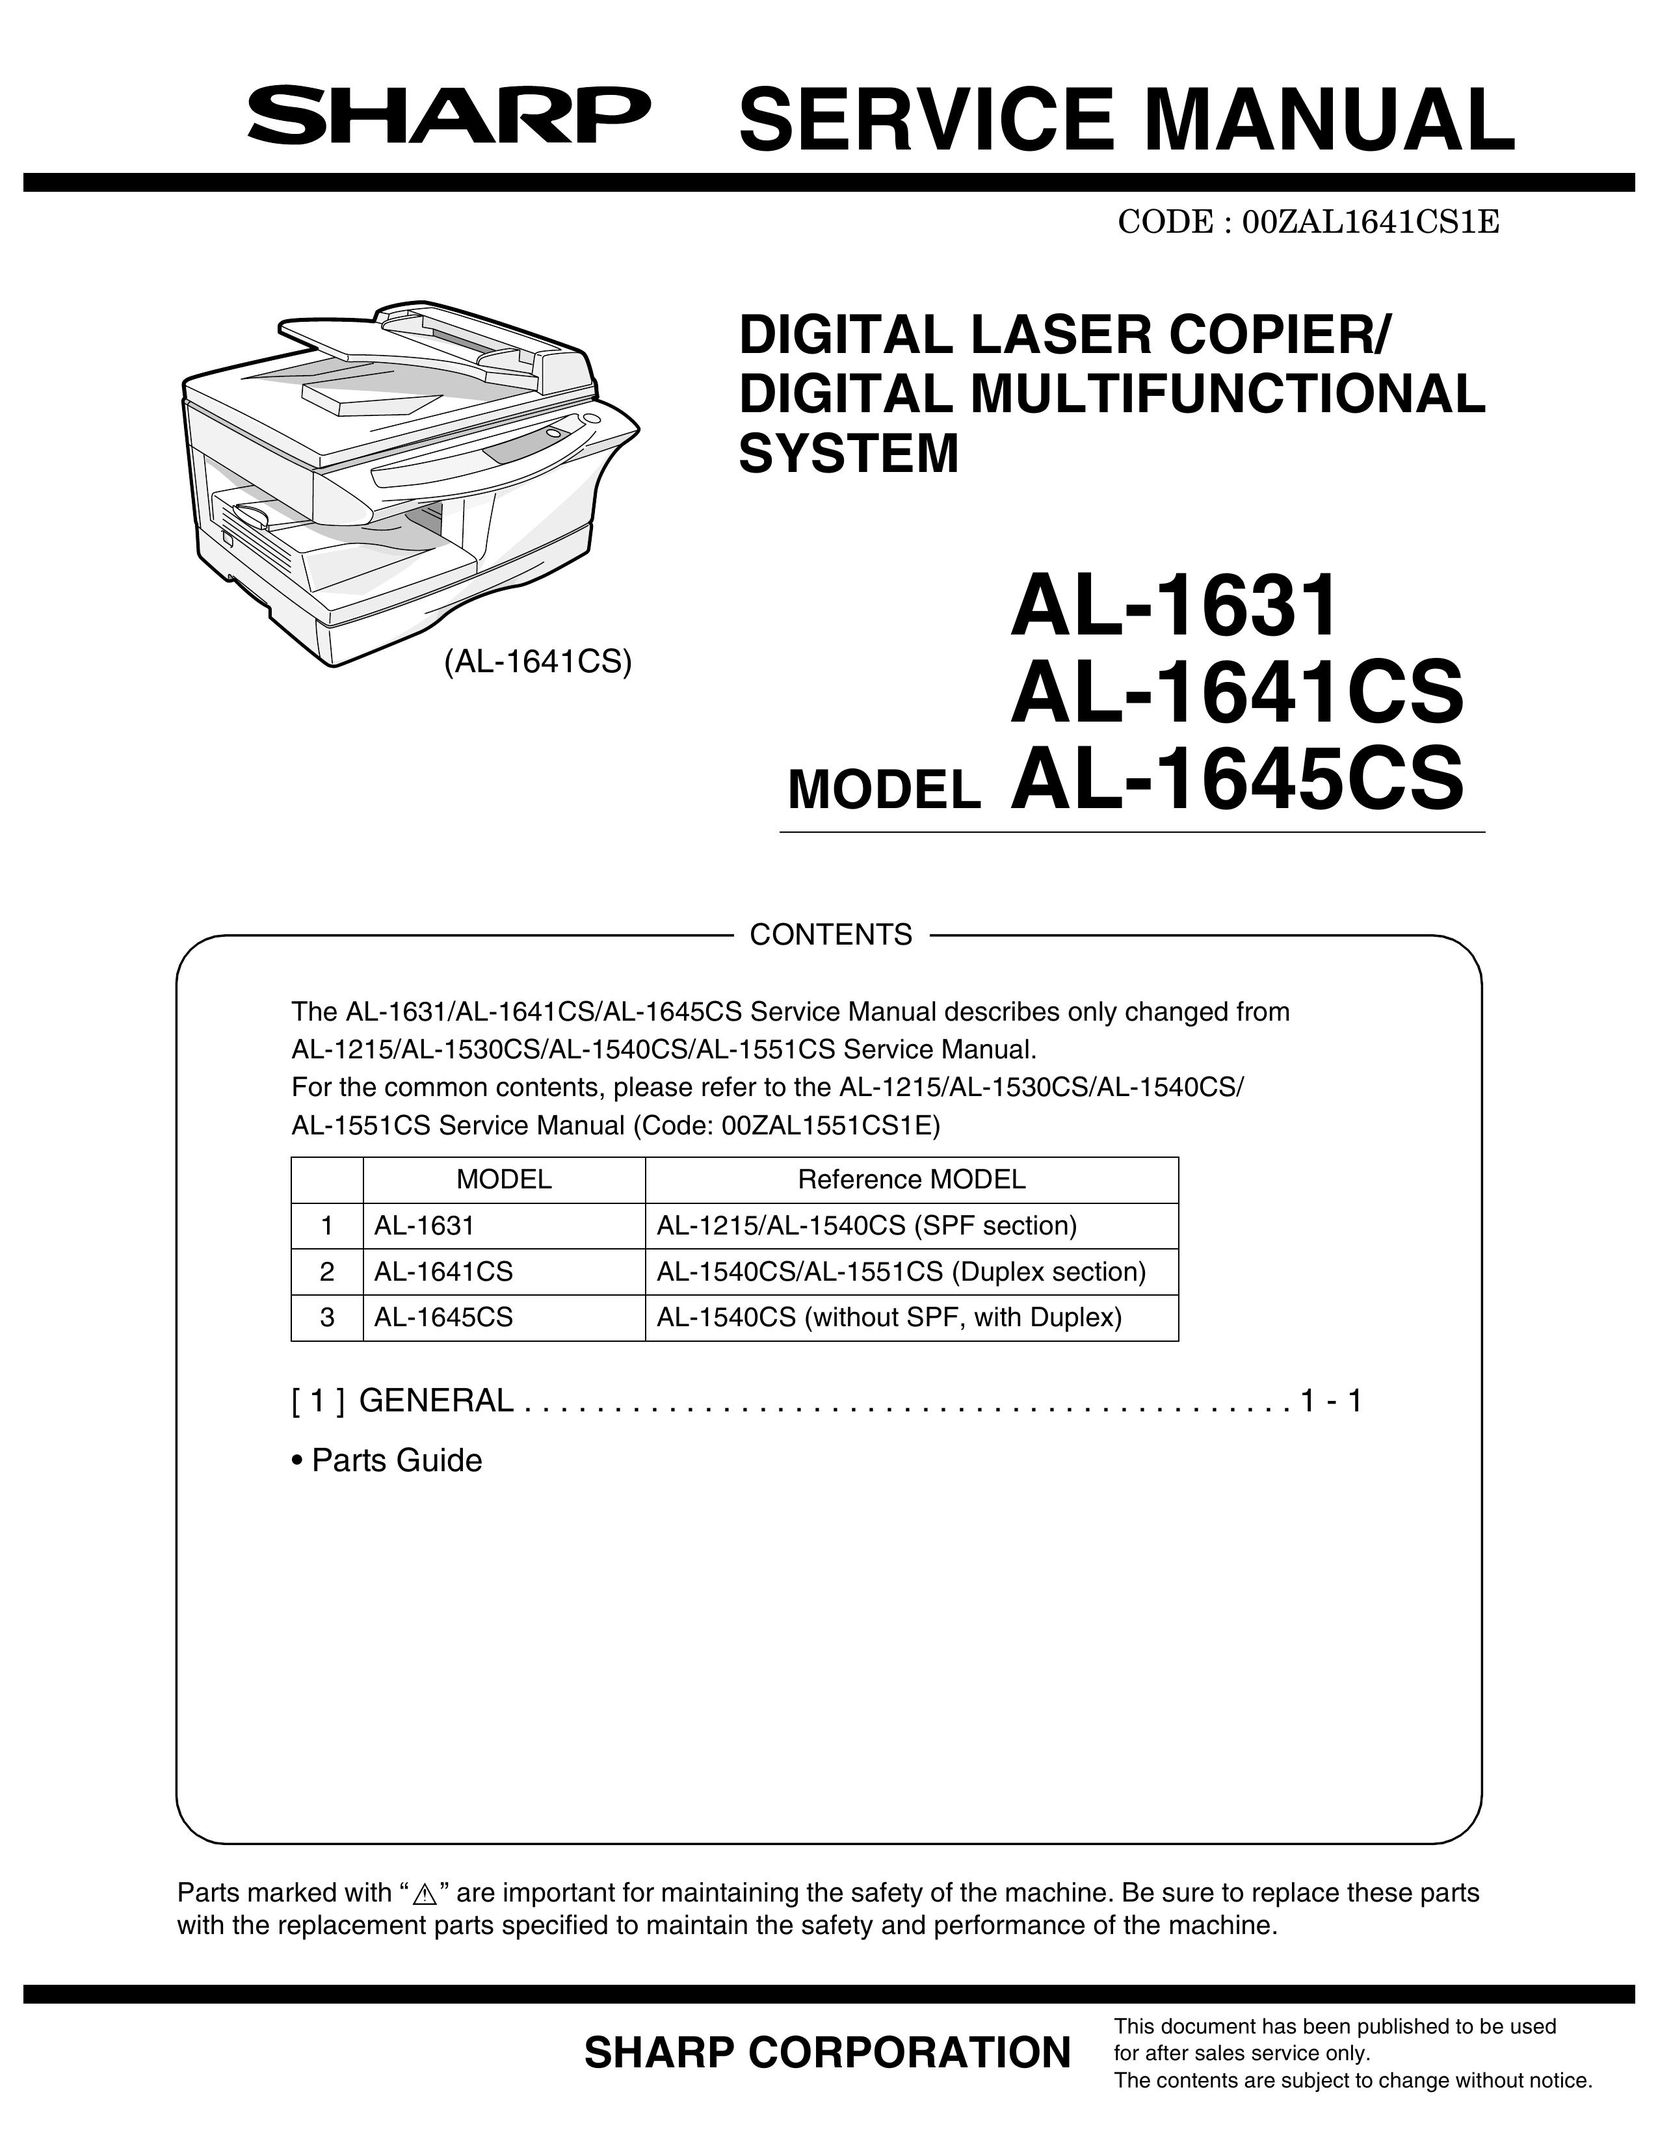 Sharp AL-1641CS All in One Printer User Manual